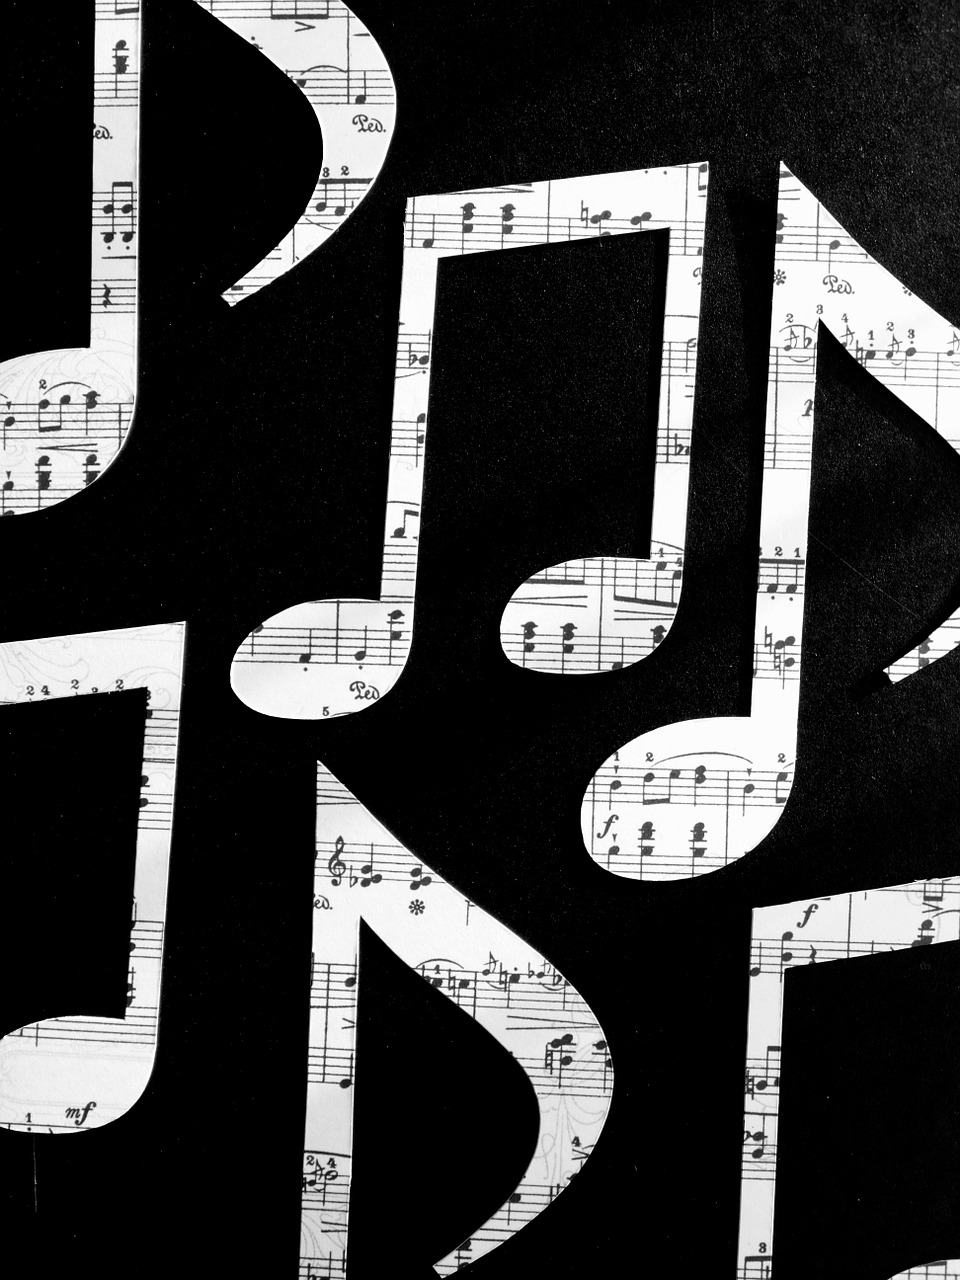 sheet music music contour free photo